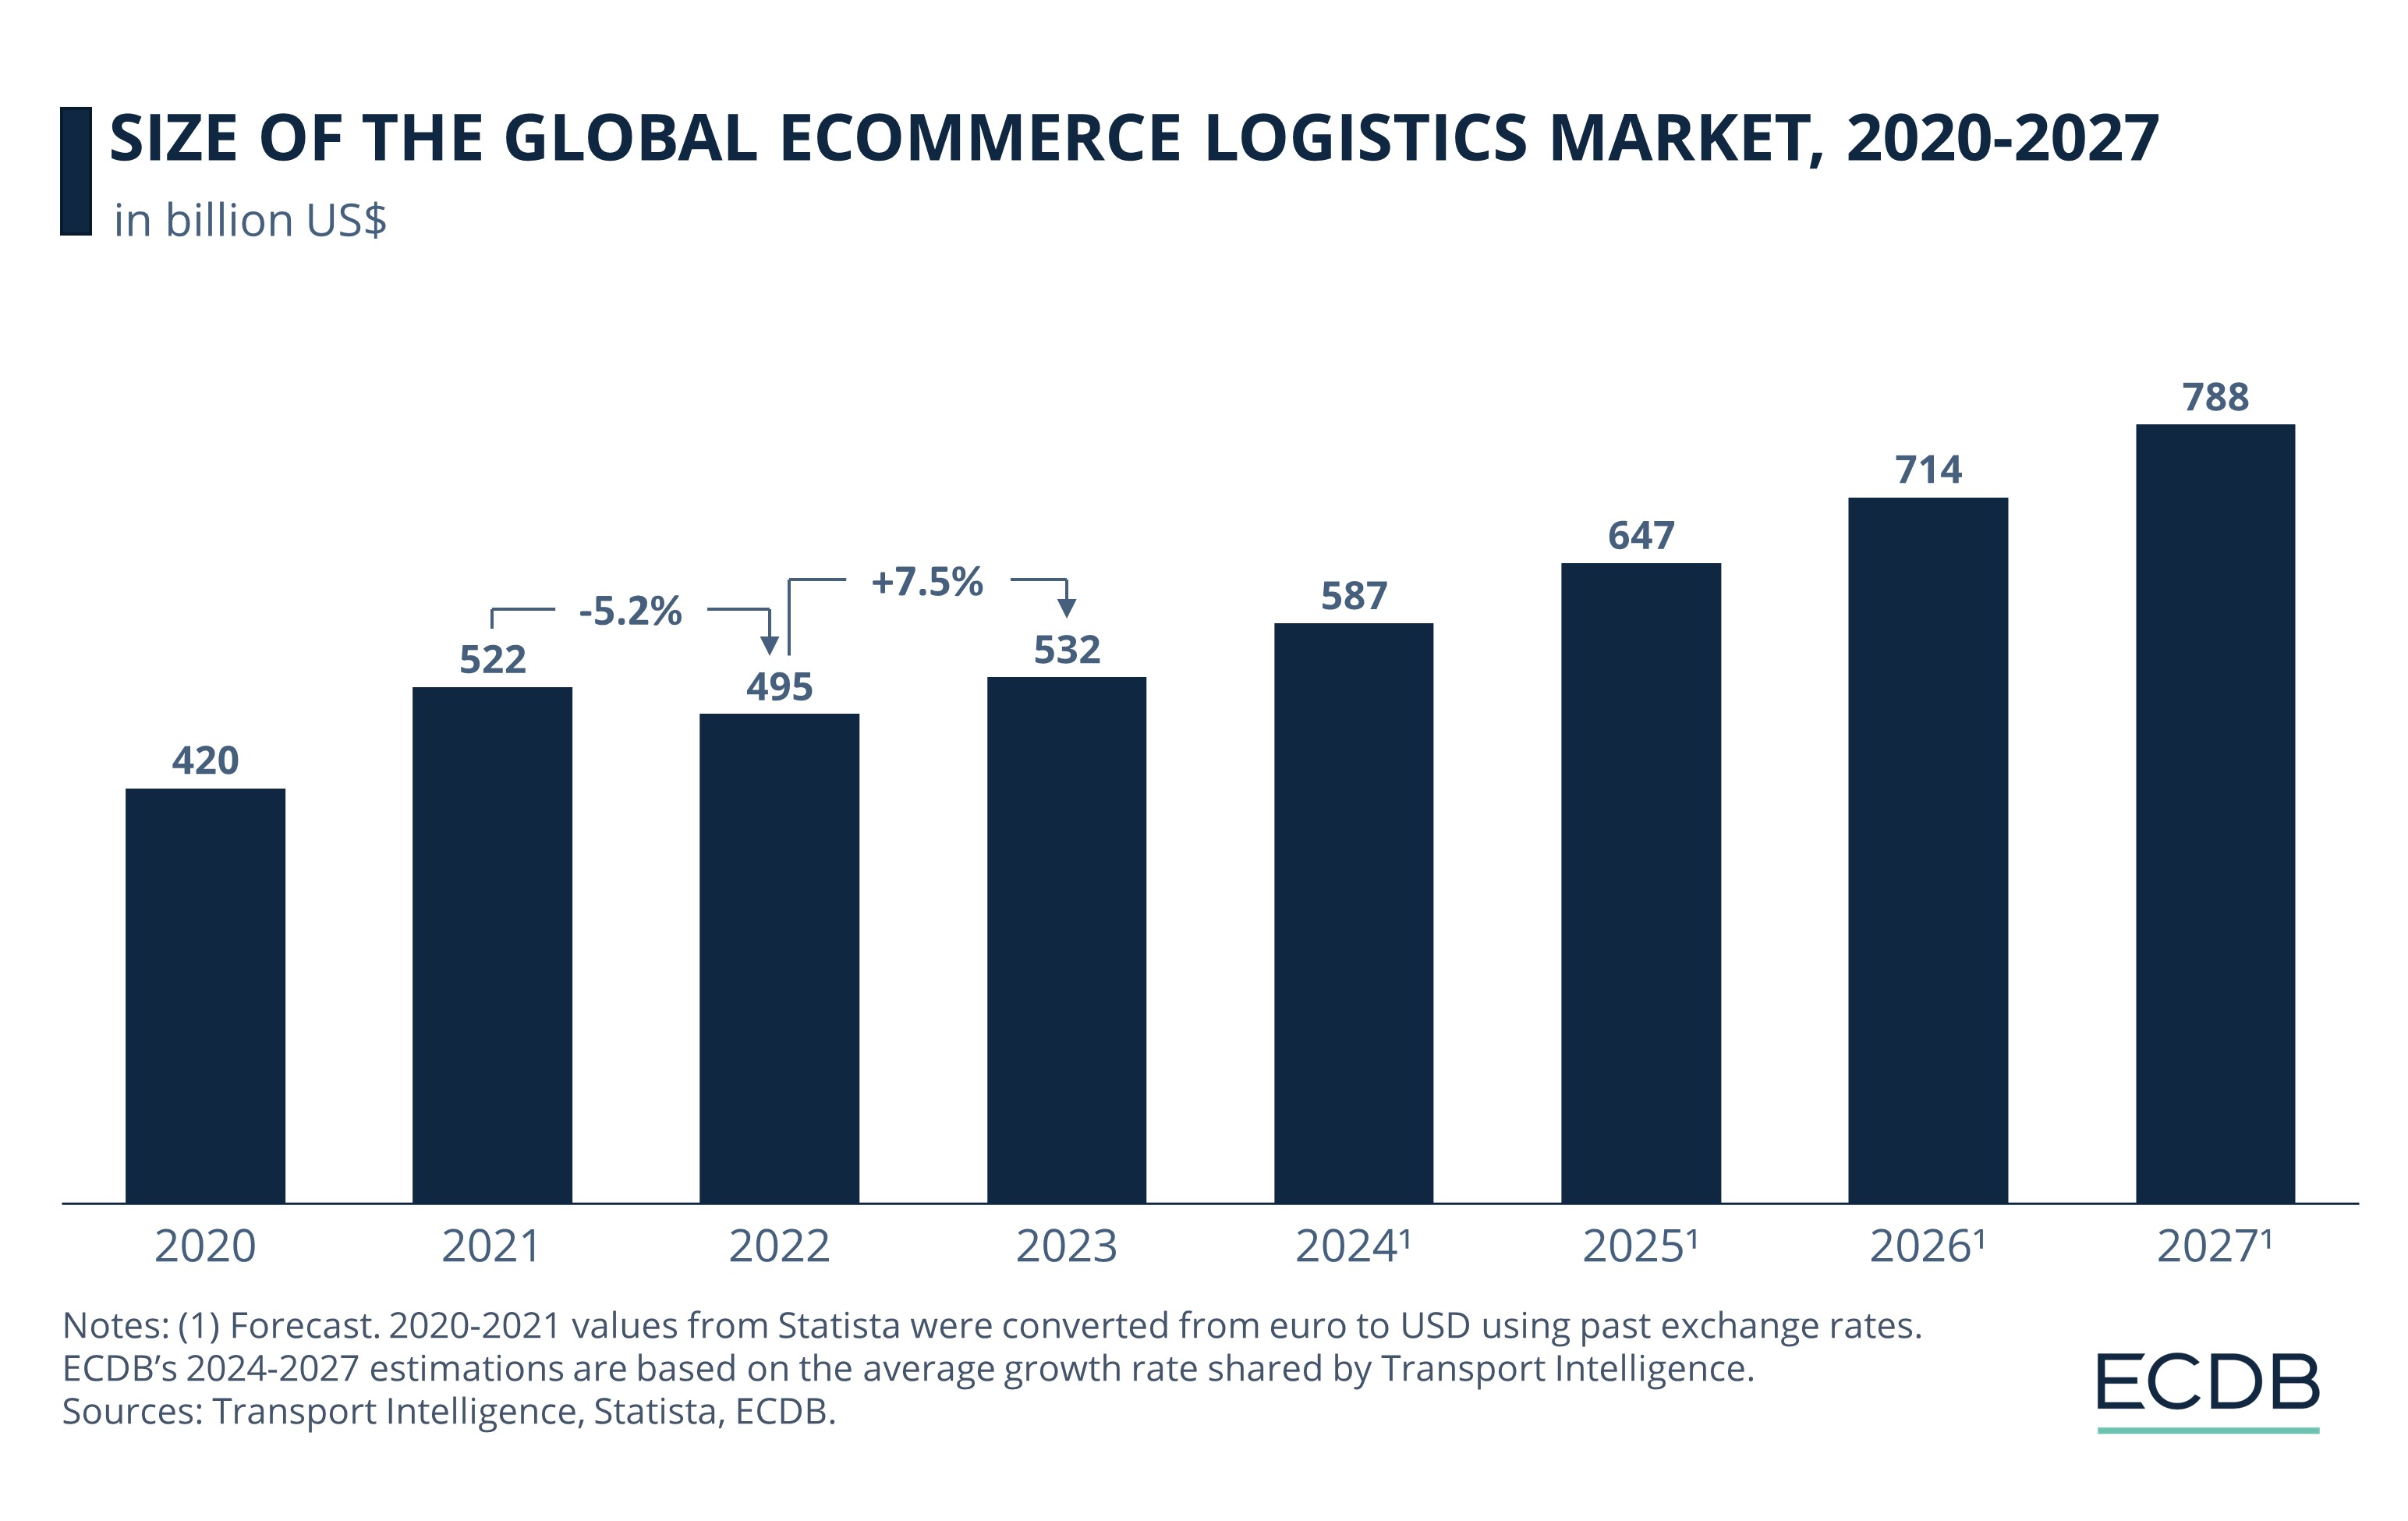 Size of the Global Ecommerce Logistics Market, 2020-2027